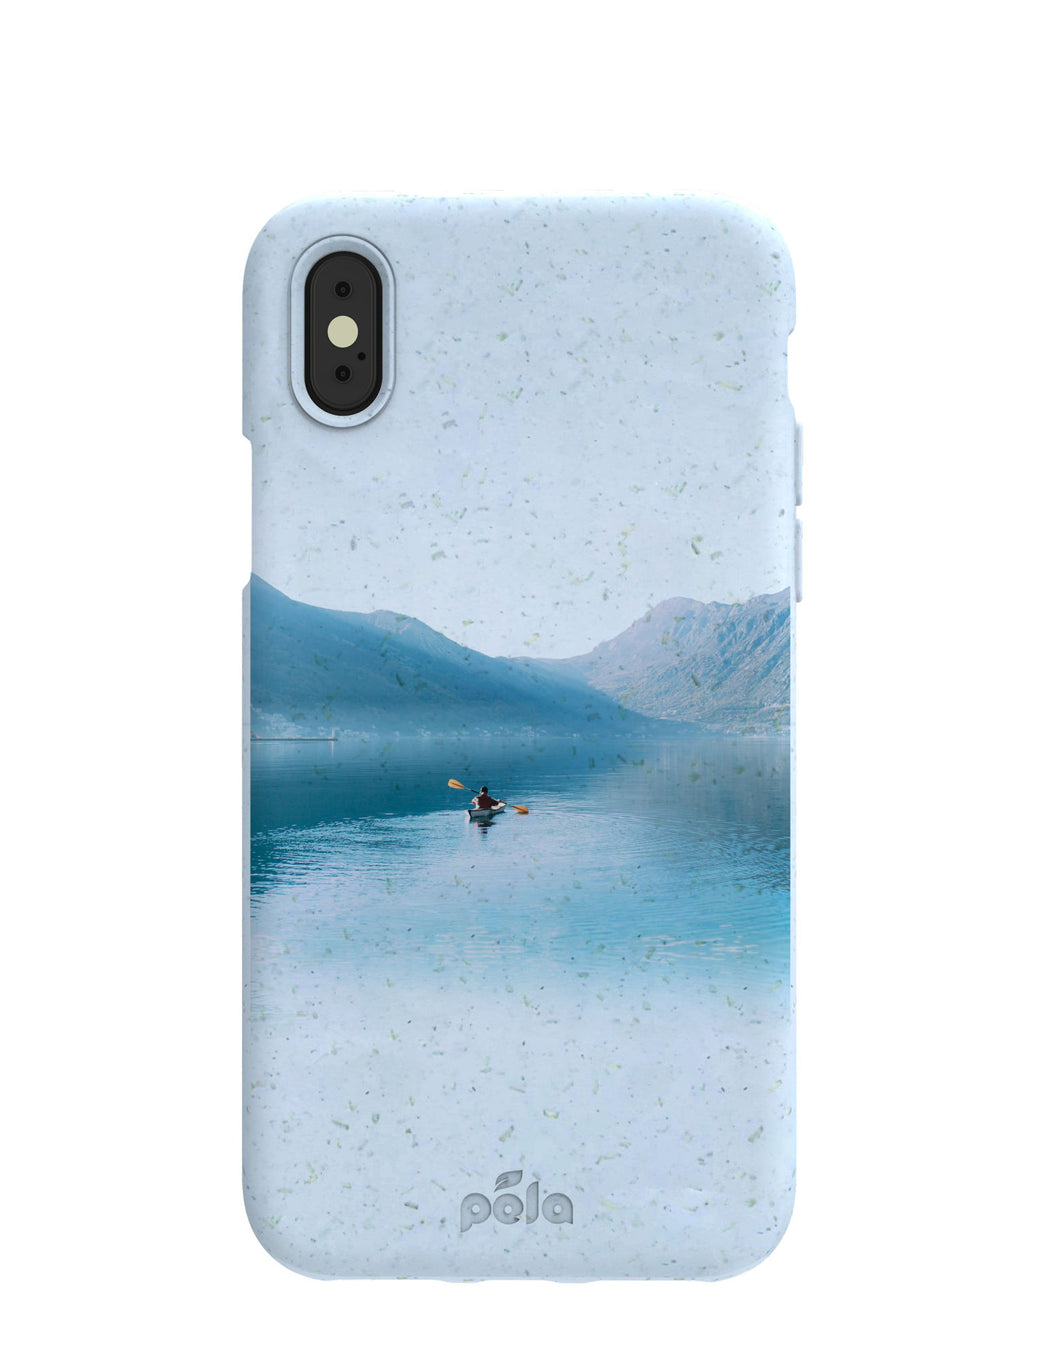 Powder Blue Serene iPhone X Case